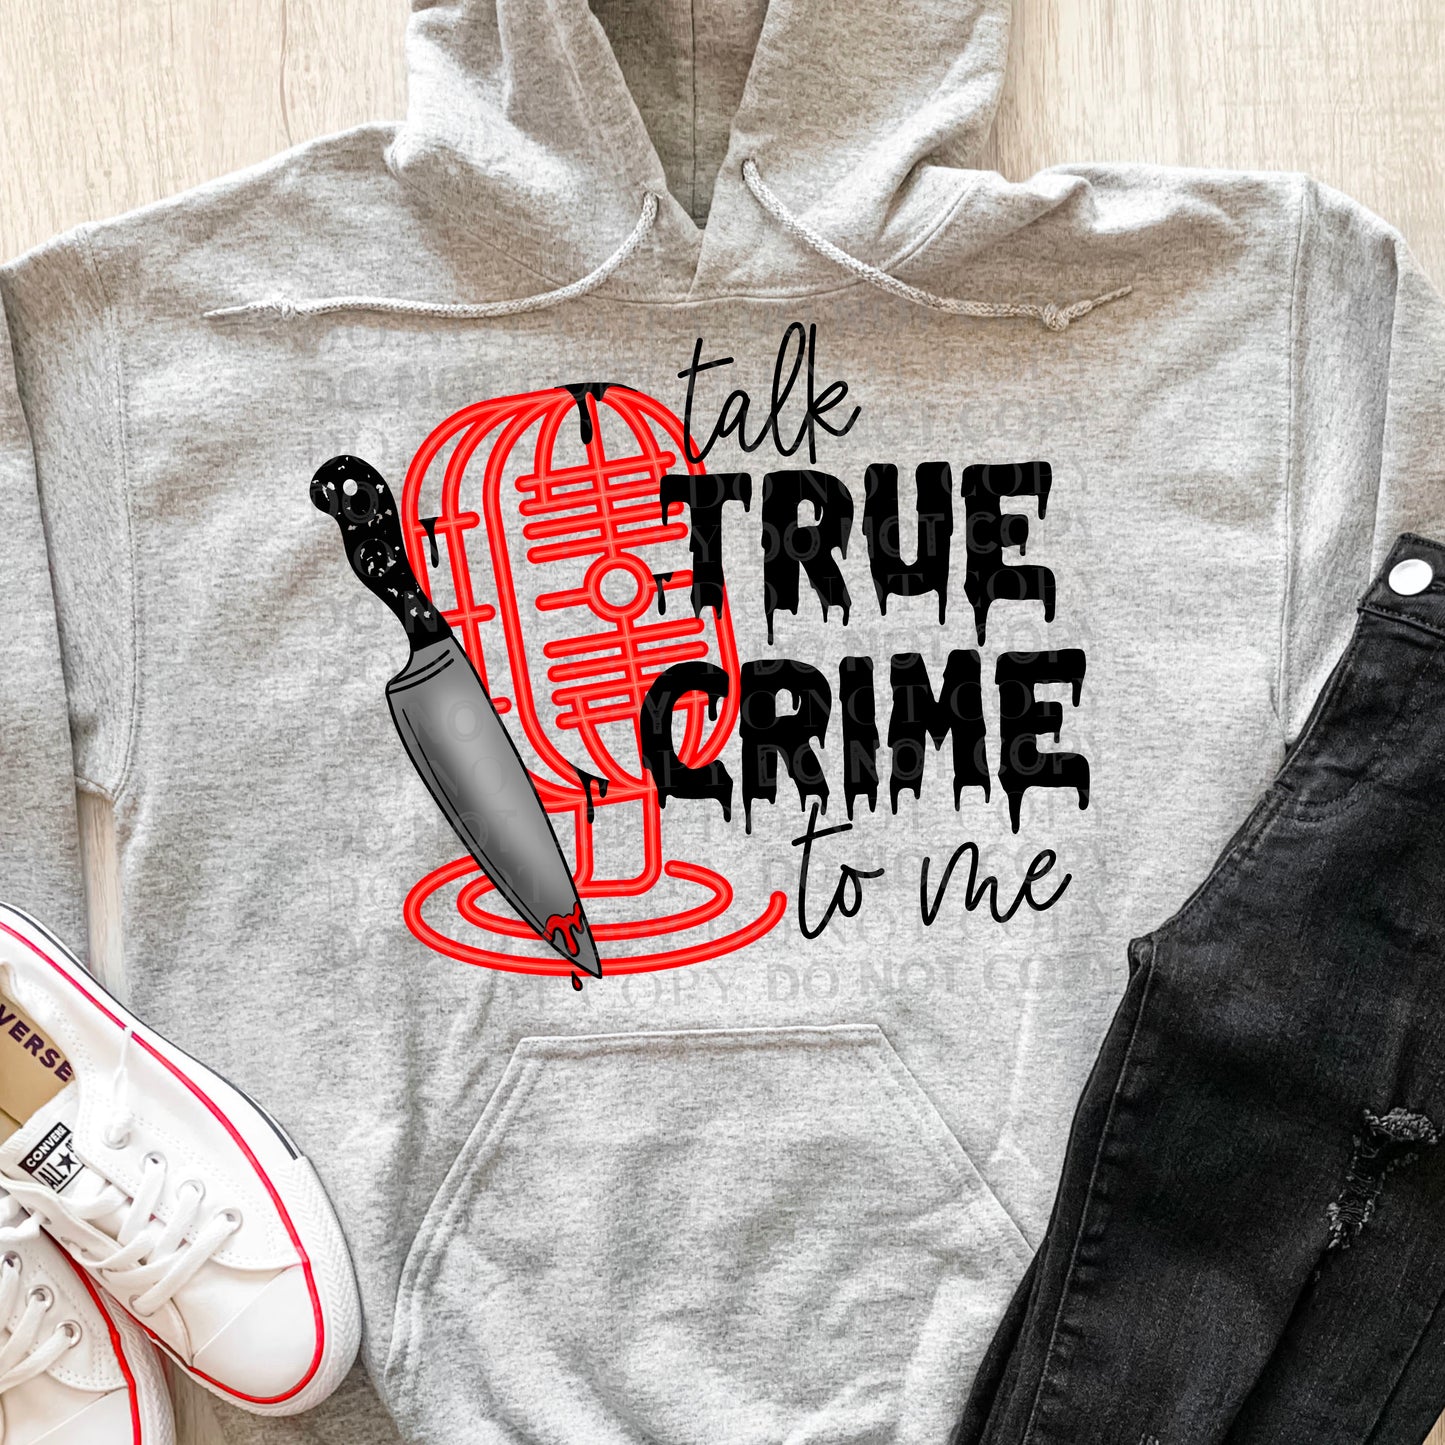 Talk true crime to me -DTF PRINT